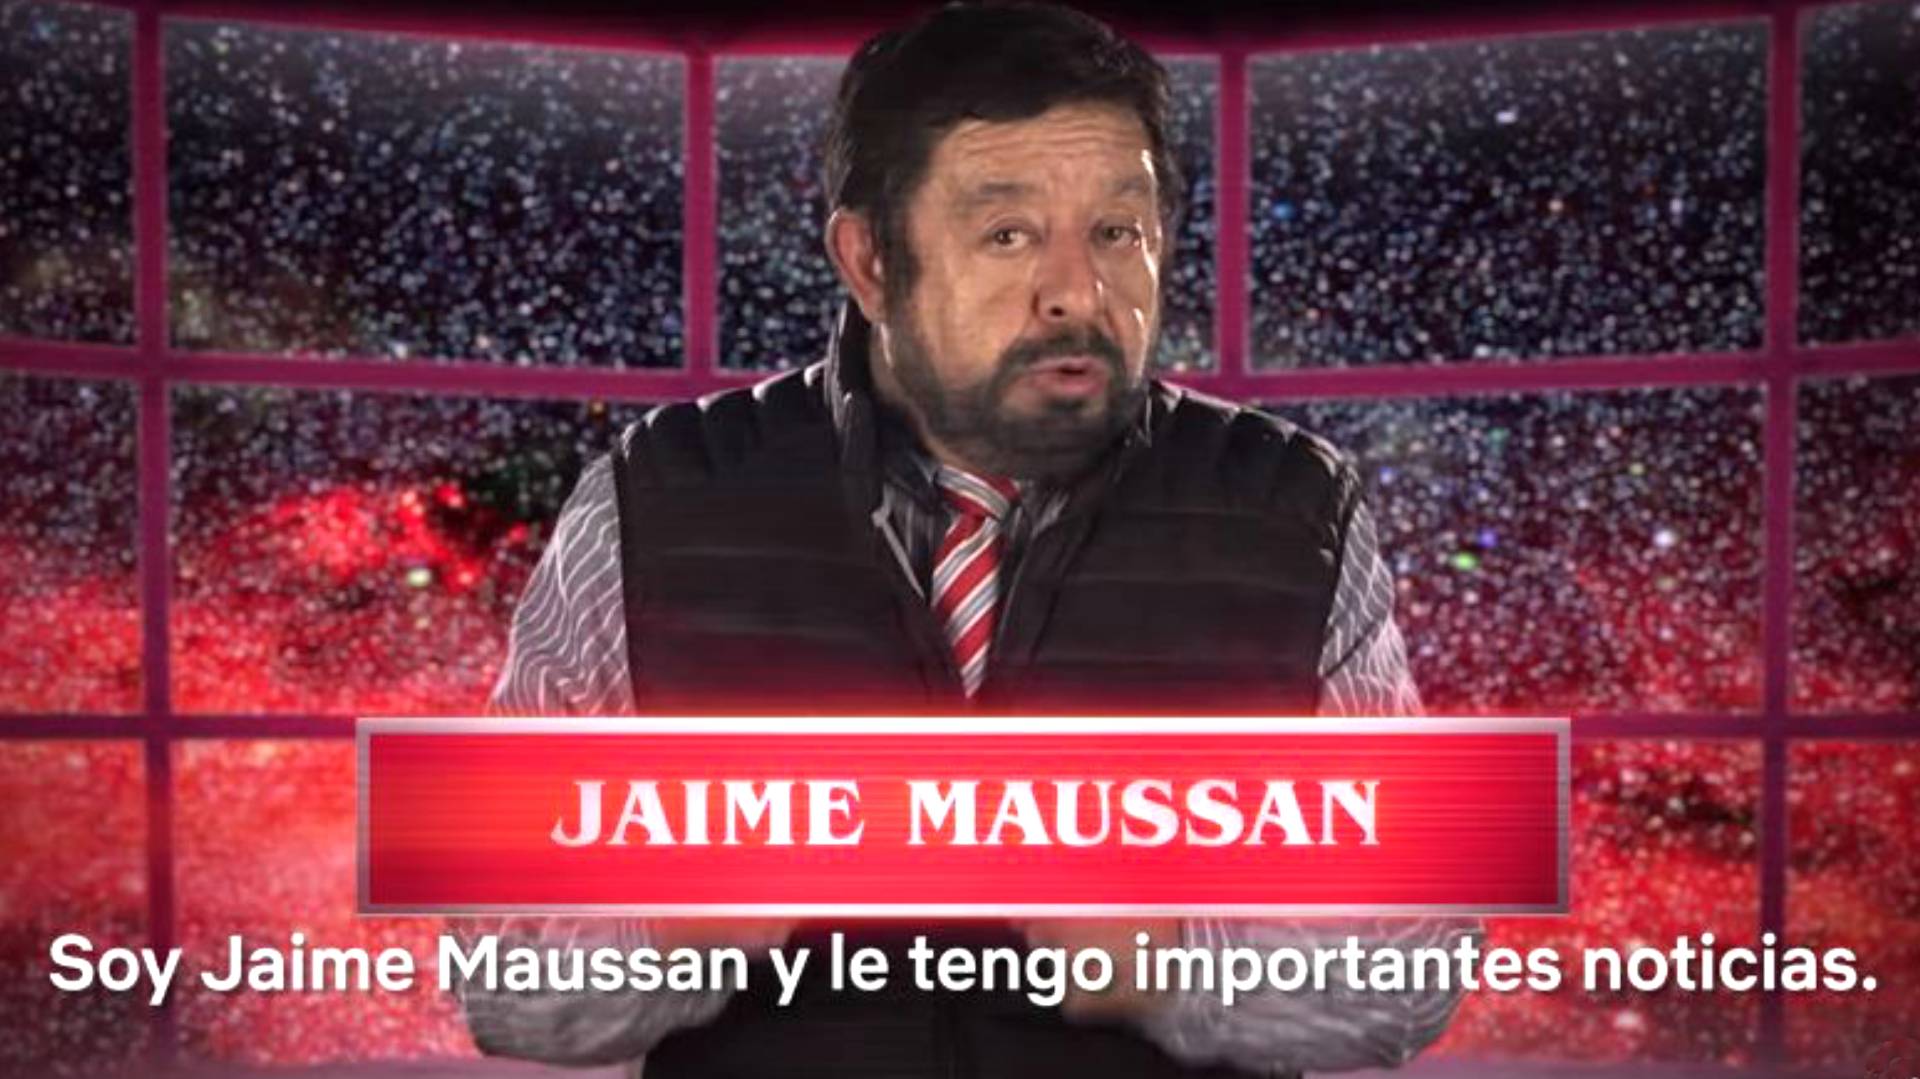 Jaime Maussan es el investigador mexicano más famoso sobre el fenómeno OVNI (Foto: Netflix)